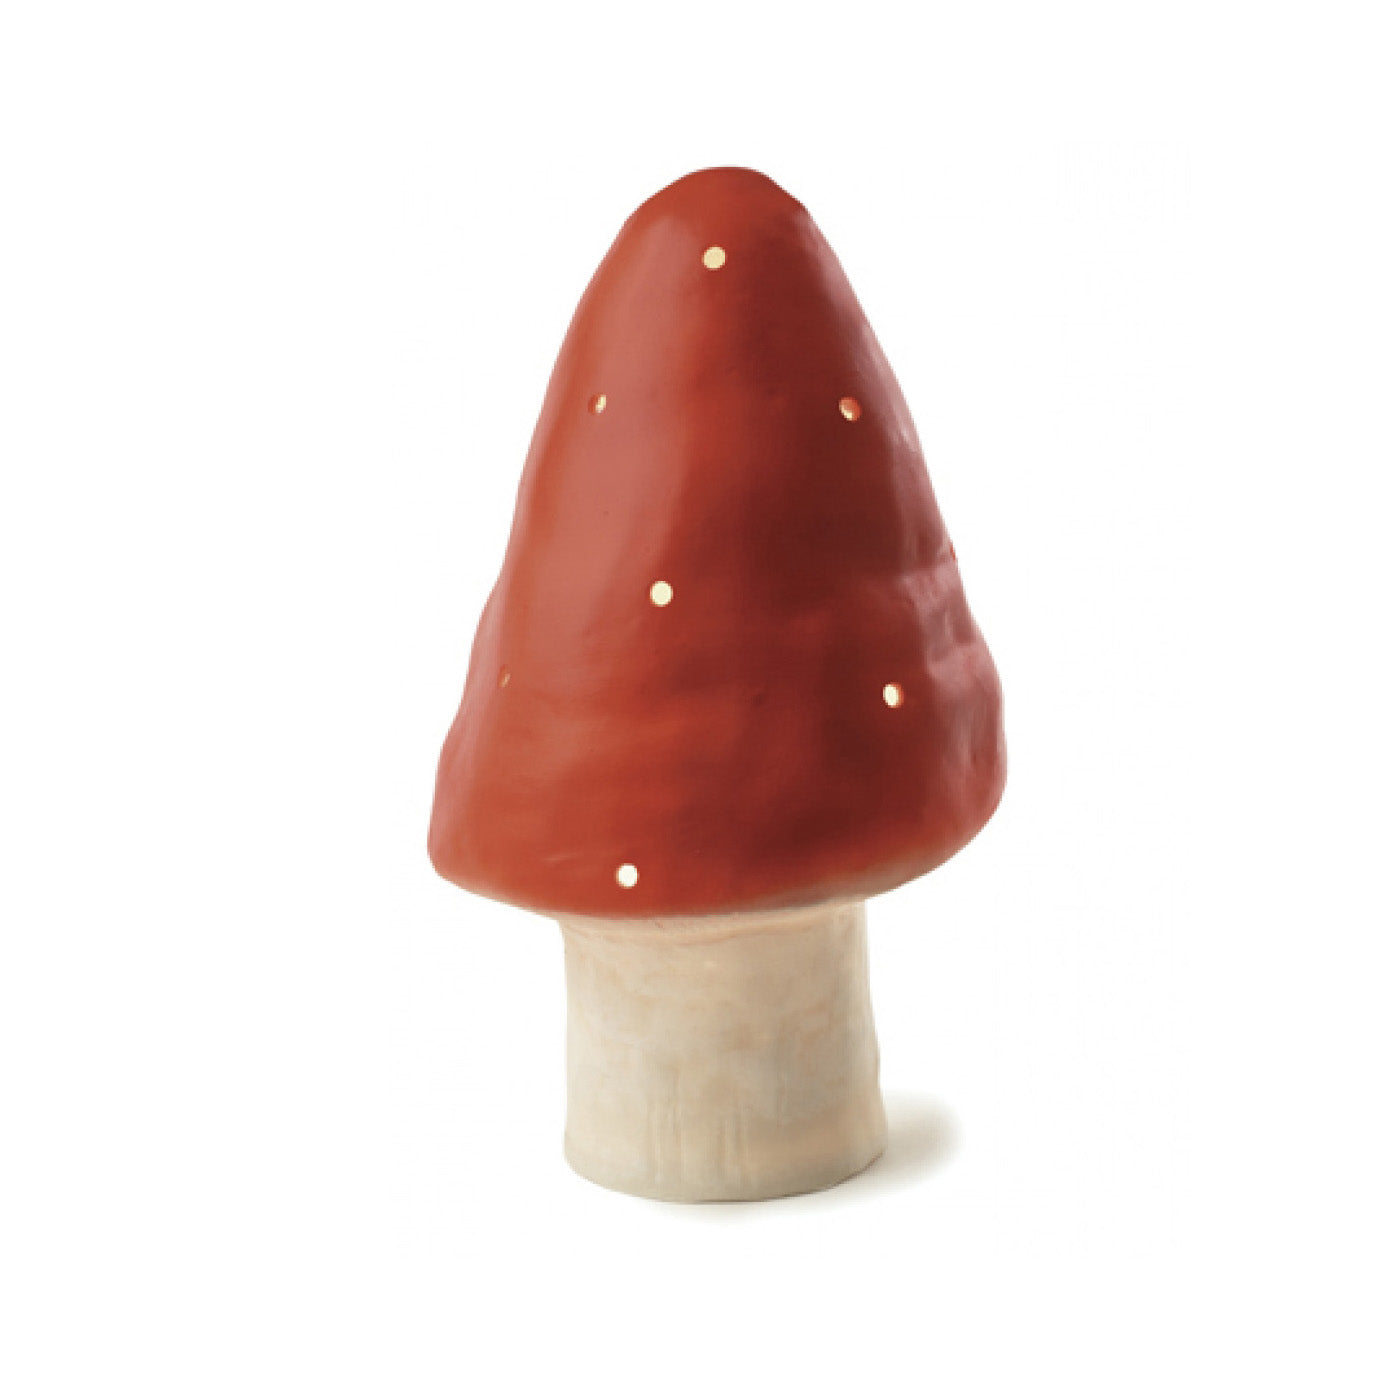 Egmont Toys Small Mushroom Night Lamp in Red (28X15X15 cm)